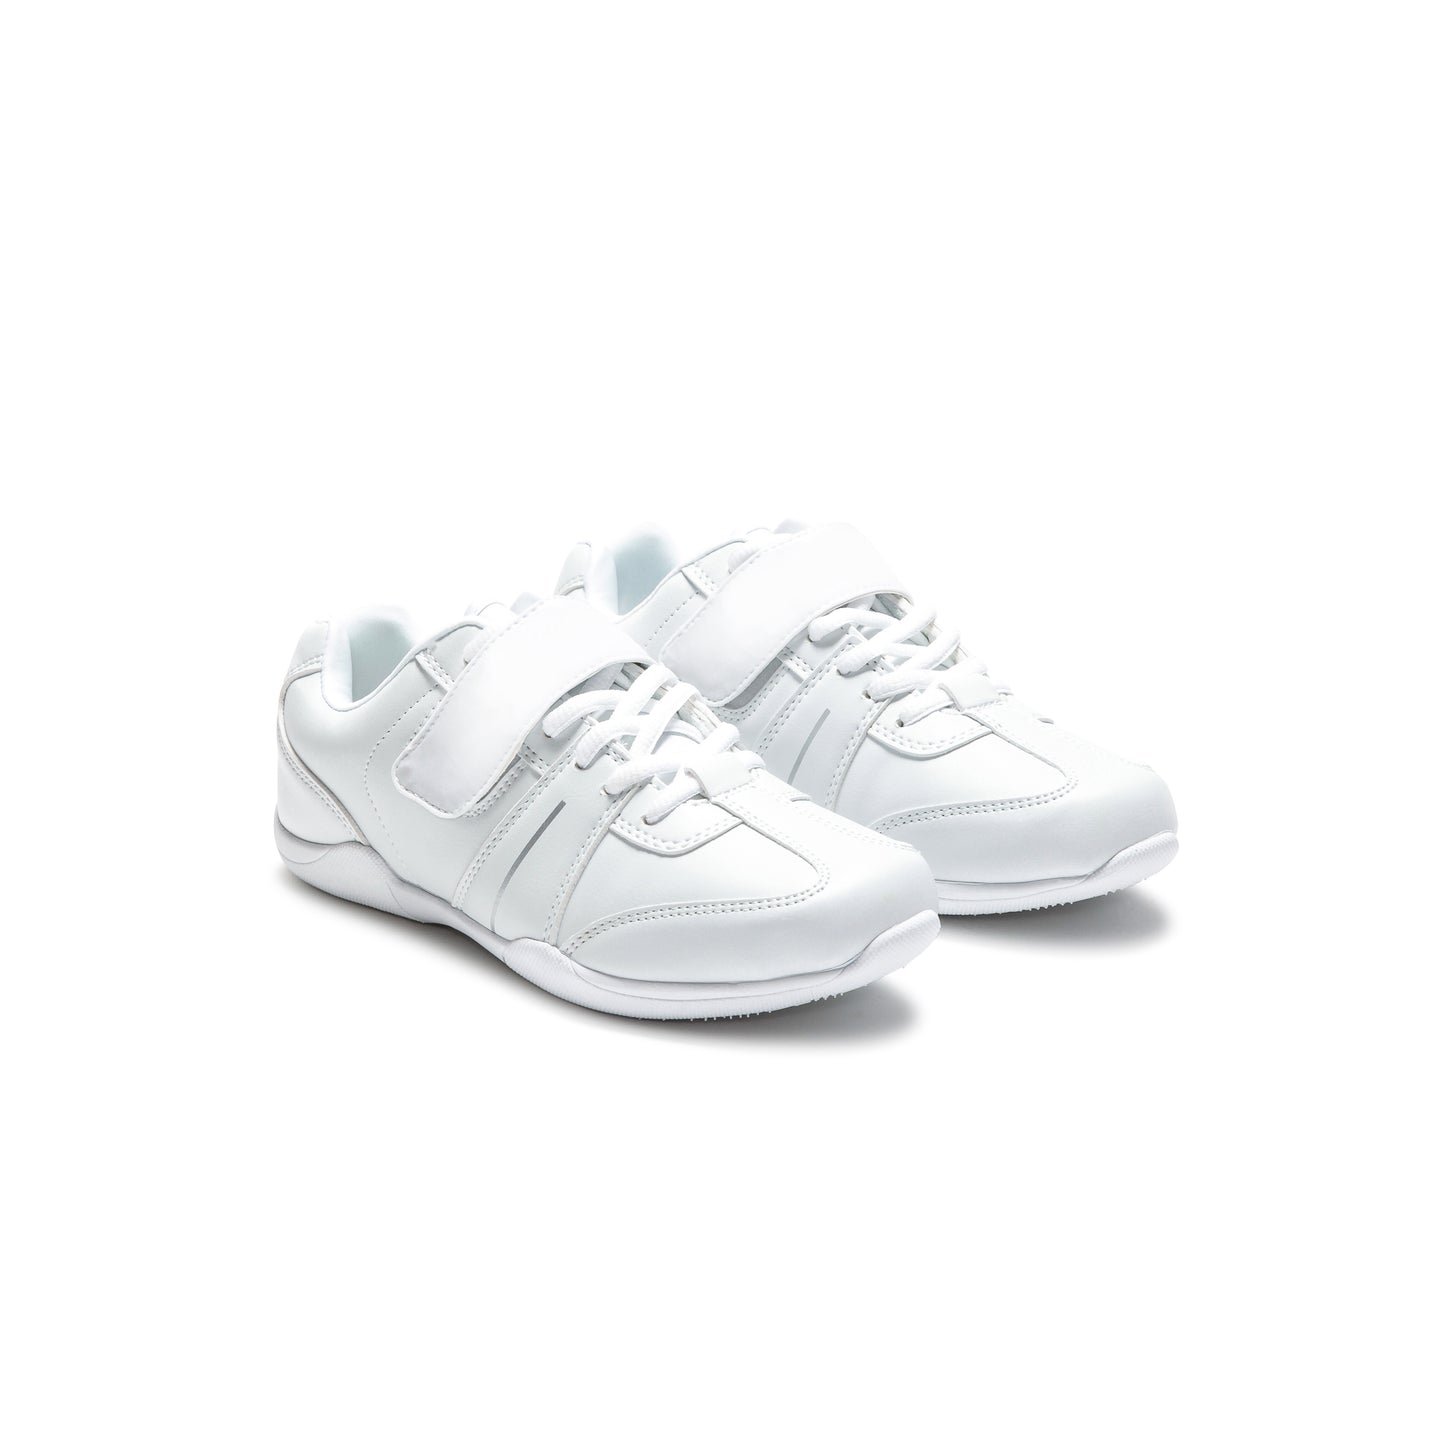 Pair of Pastry Custom Spirit Cheer Sneaker in White in 3 quarter view